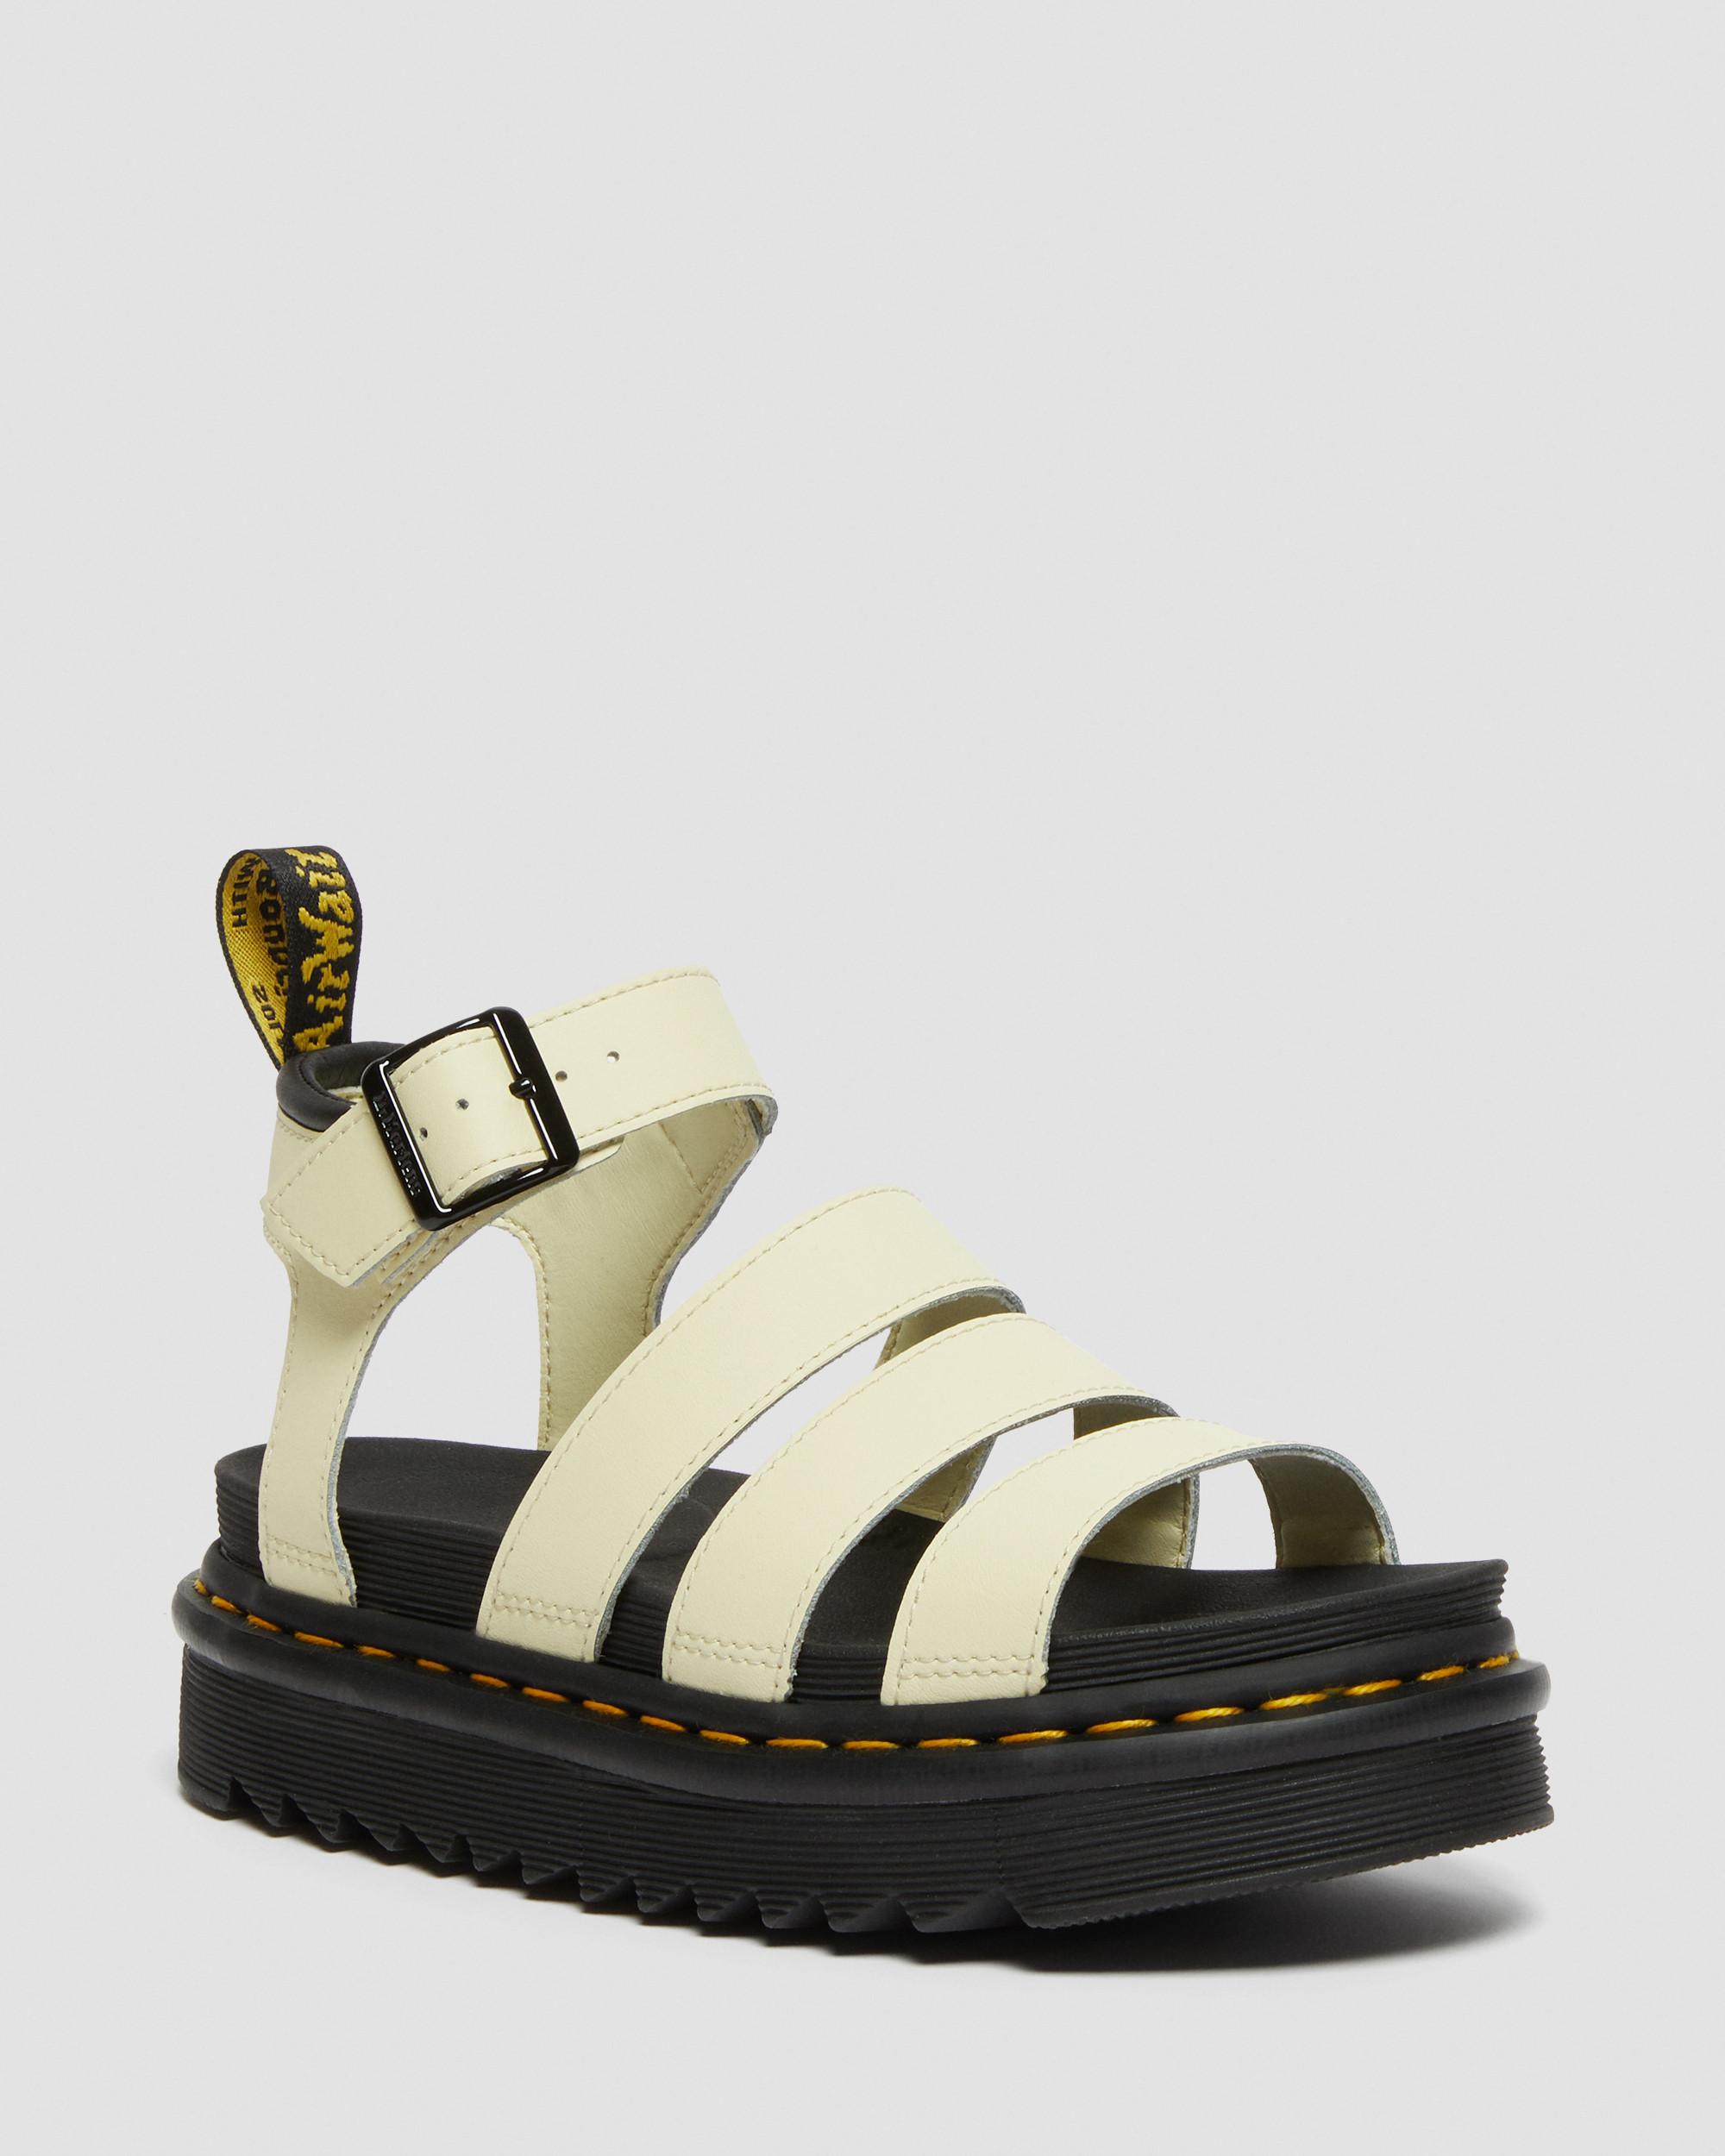 Blaire Hydro Leather Strap Sandals in Cream